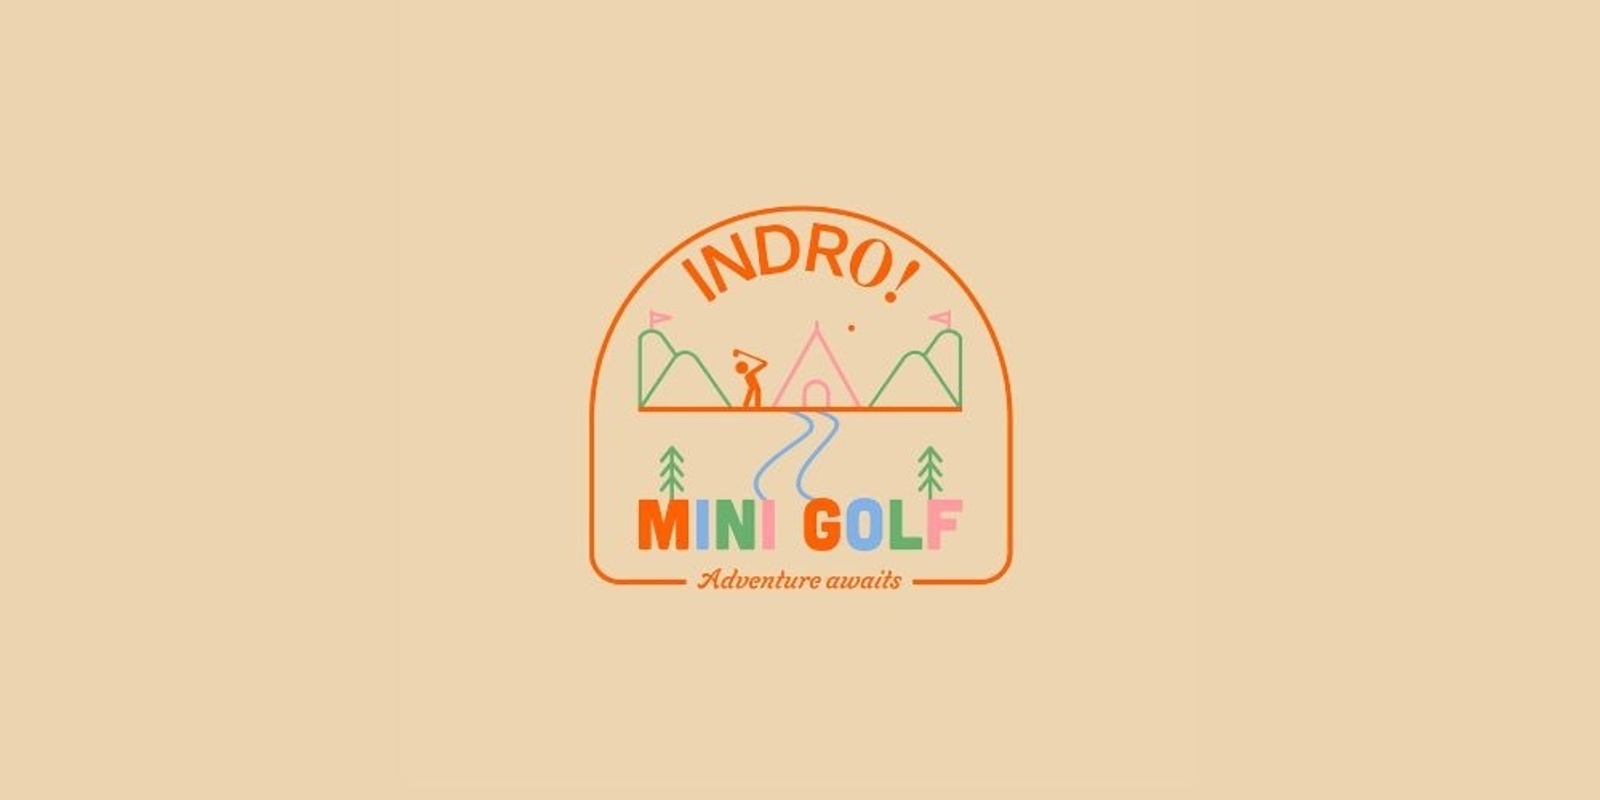 Indro! Mini Golf - Adventure awaits